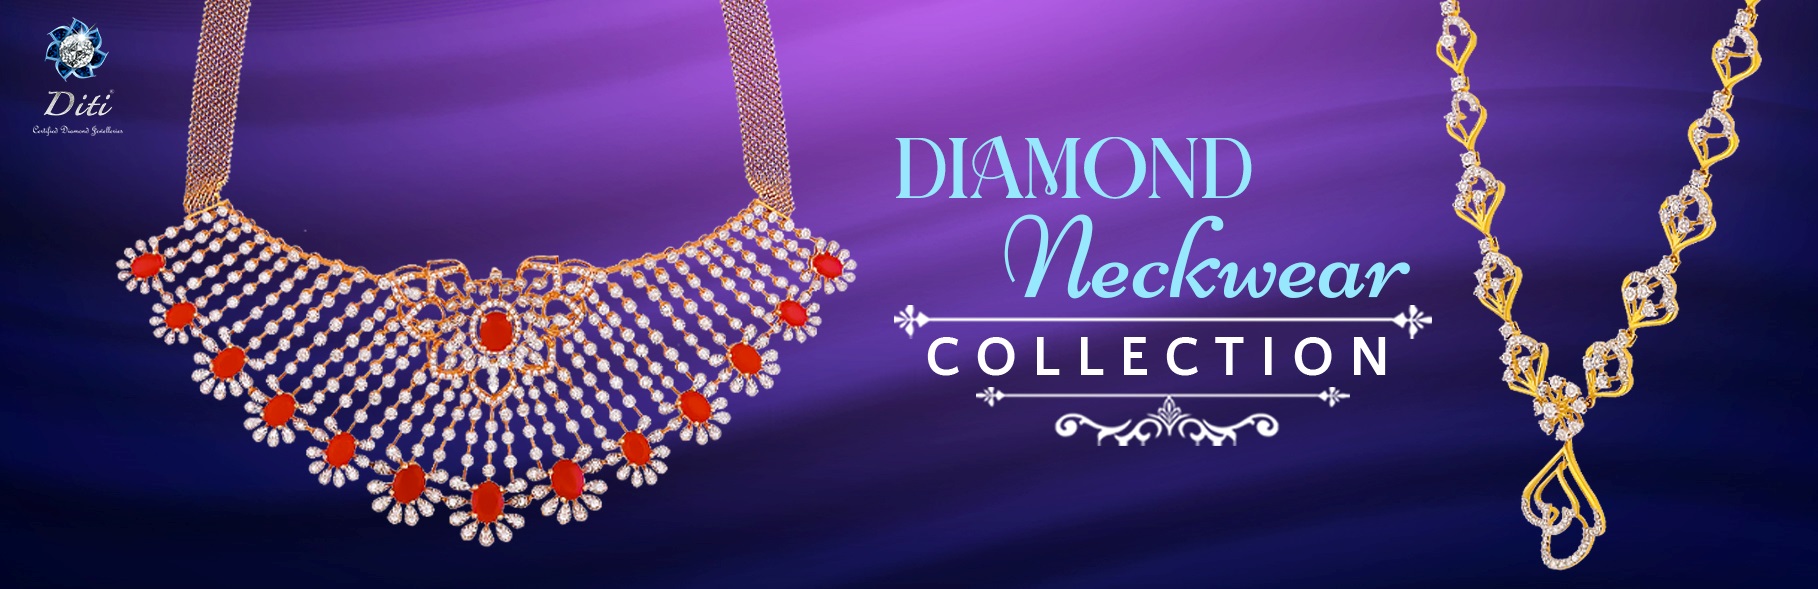 Daimond Neckwear Collection